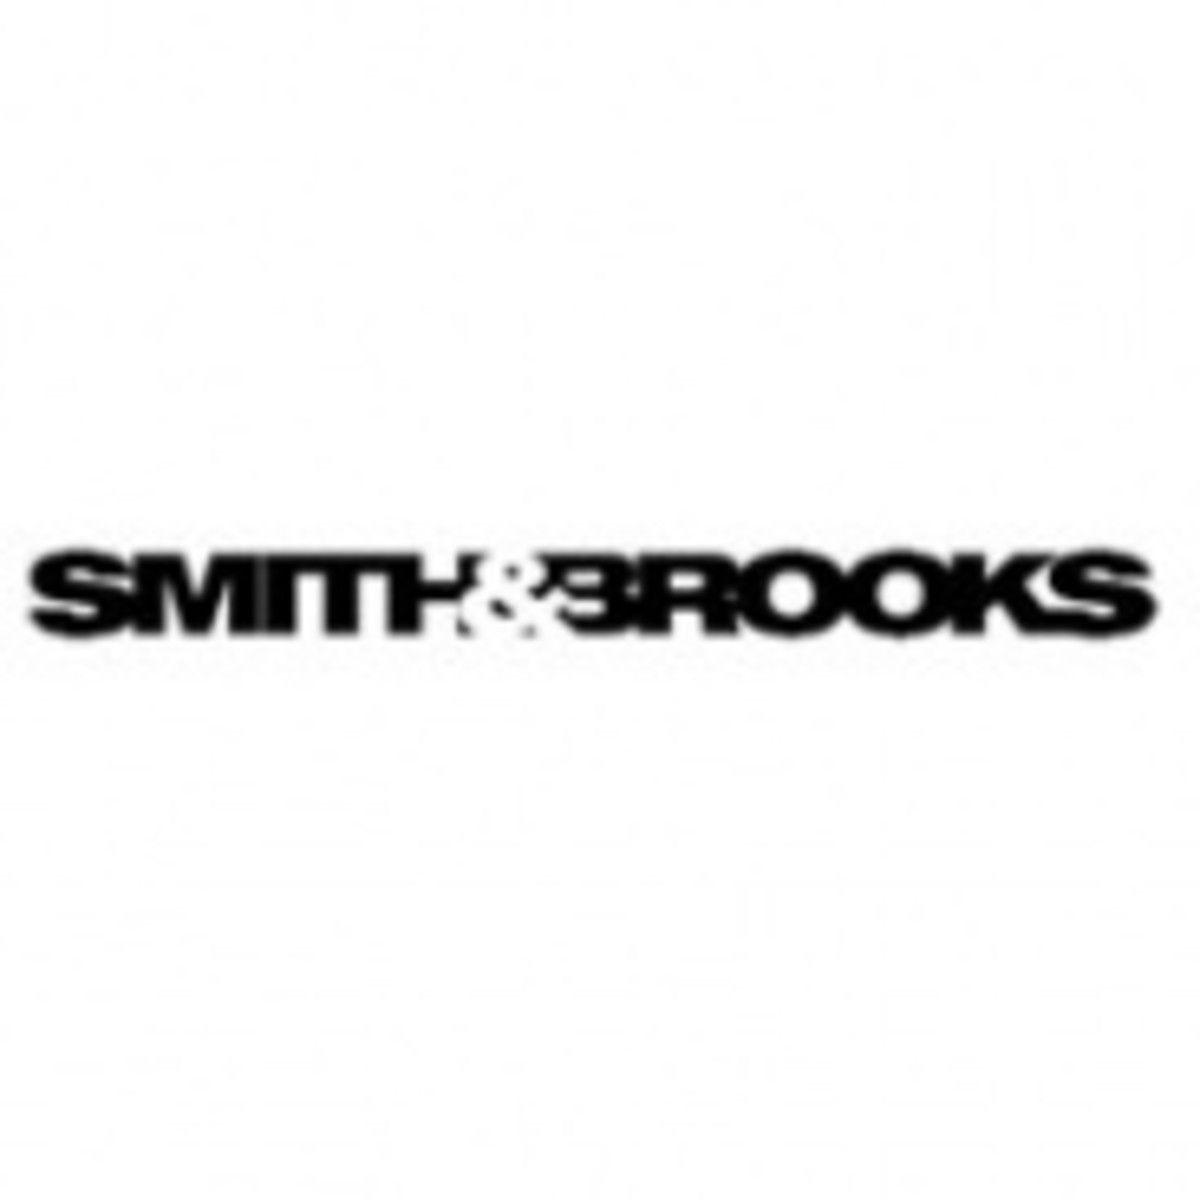 Brooks Logo - Smith & Brooks unveils new footwear division - Licensing.biz